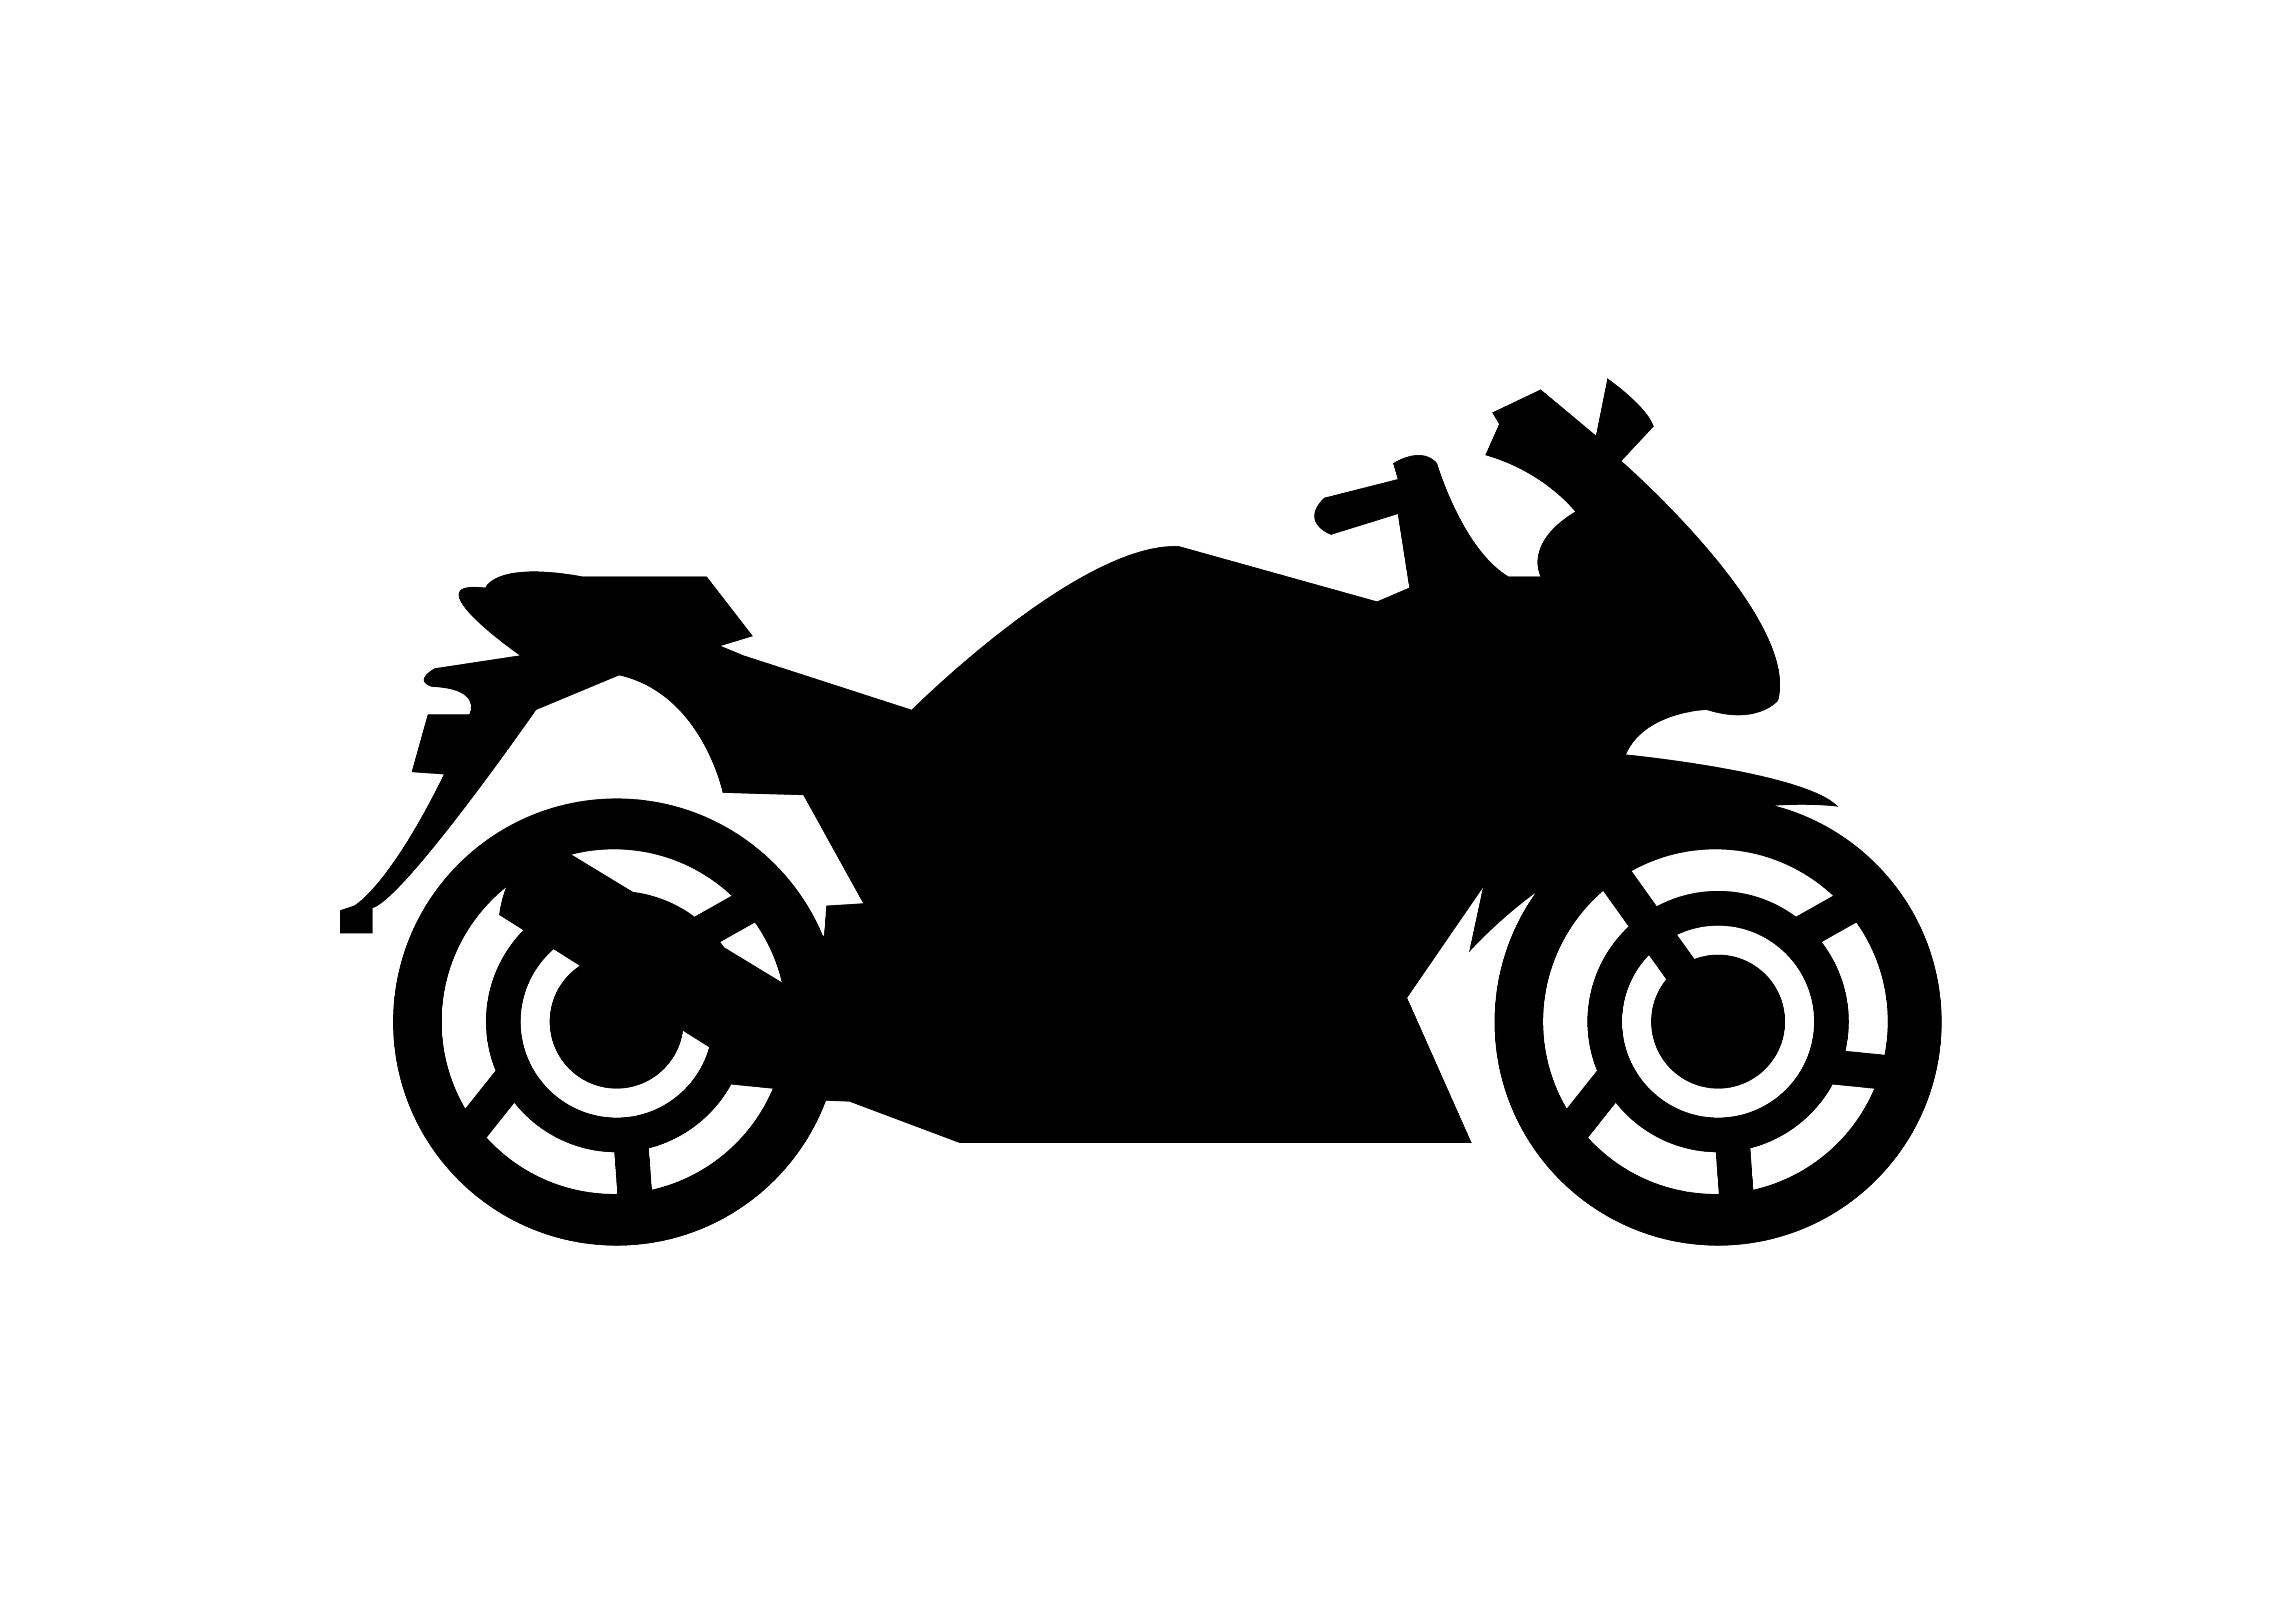 Download fast bike black silhouette - Download Free Vectors ...